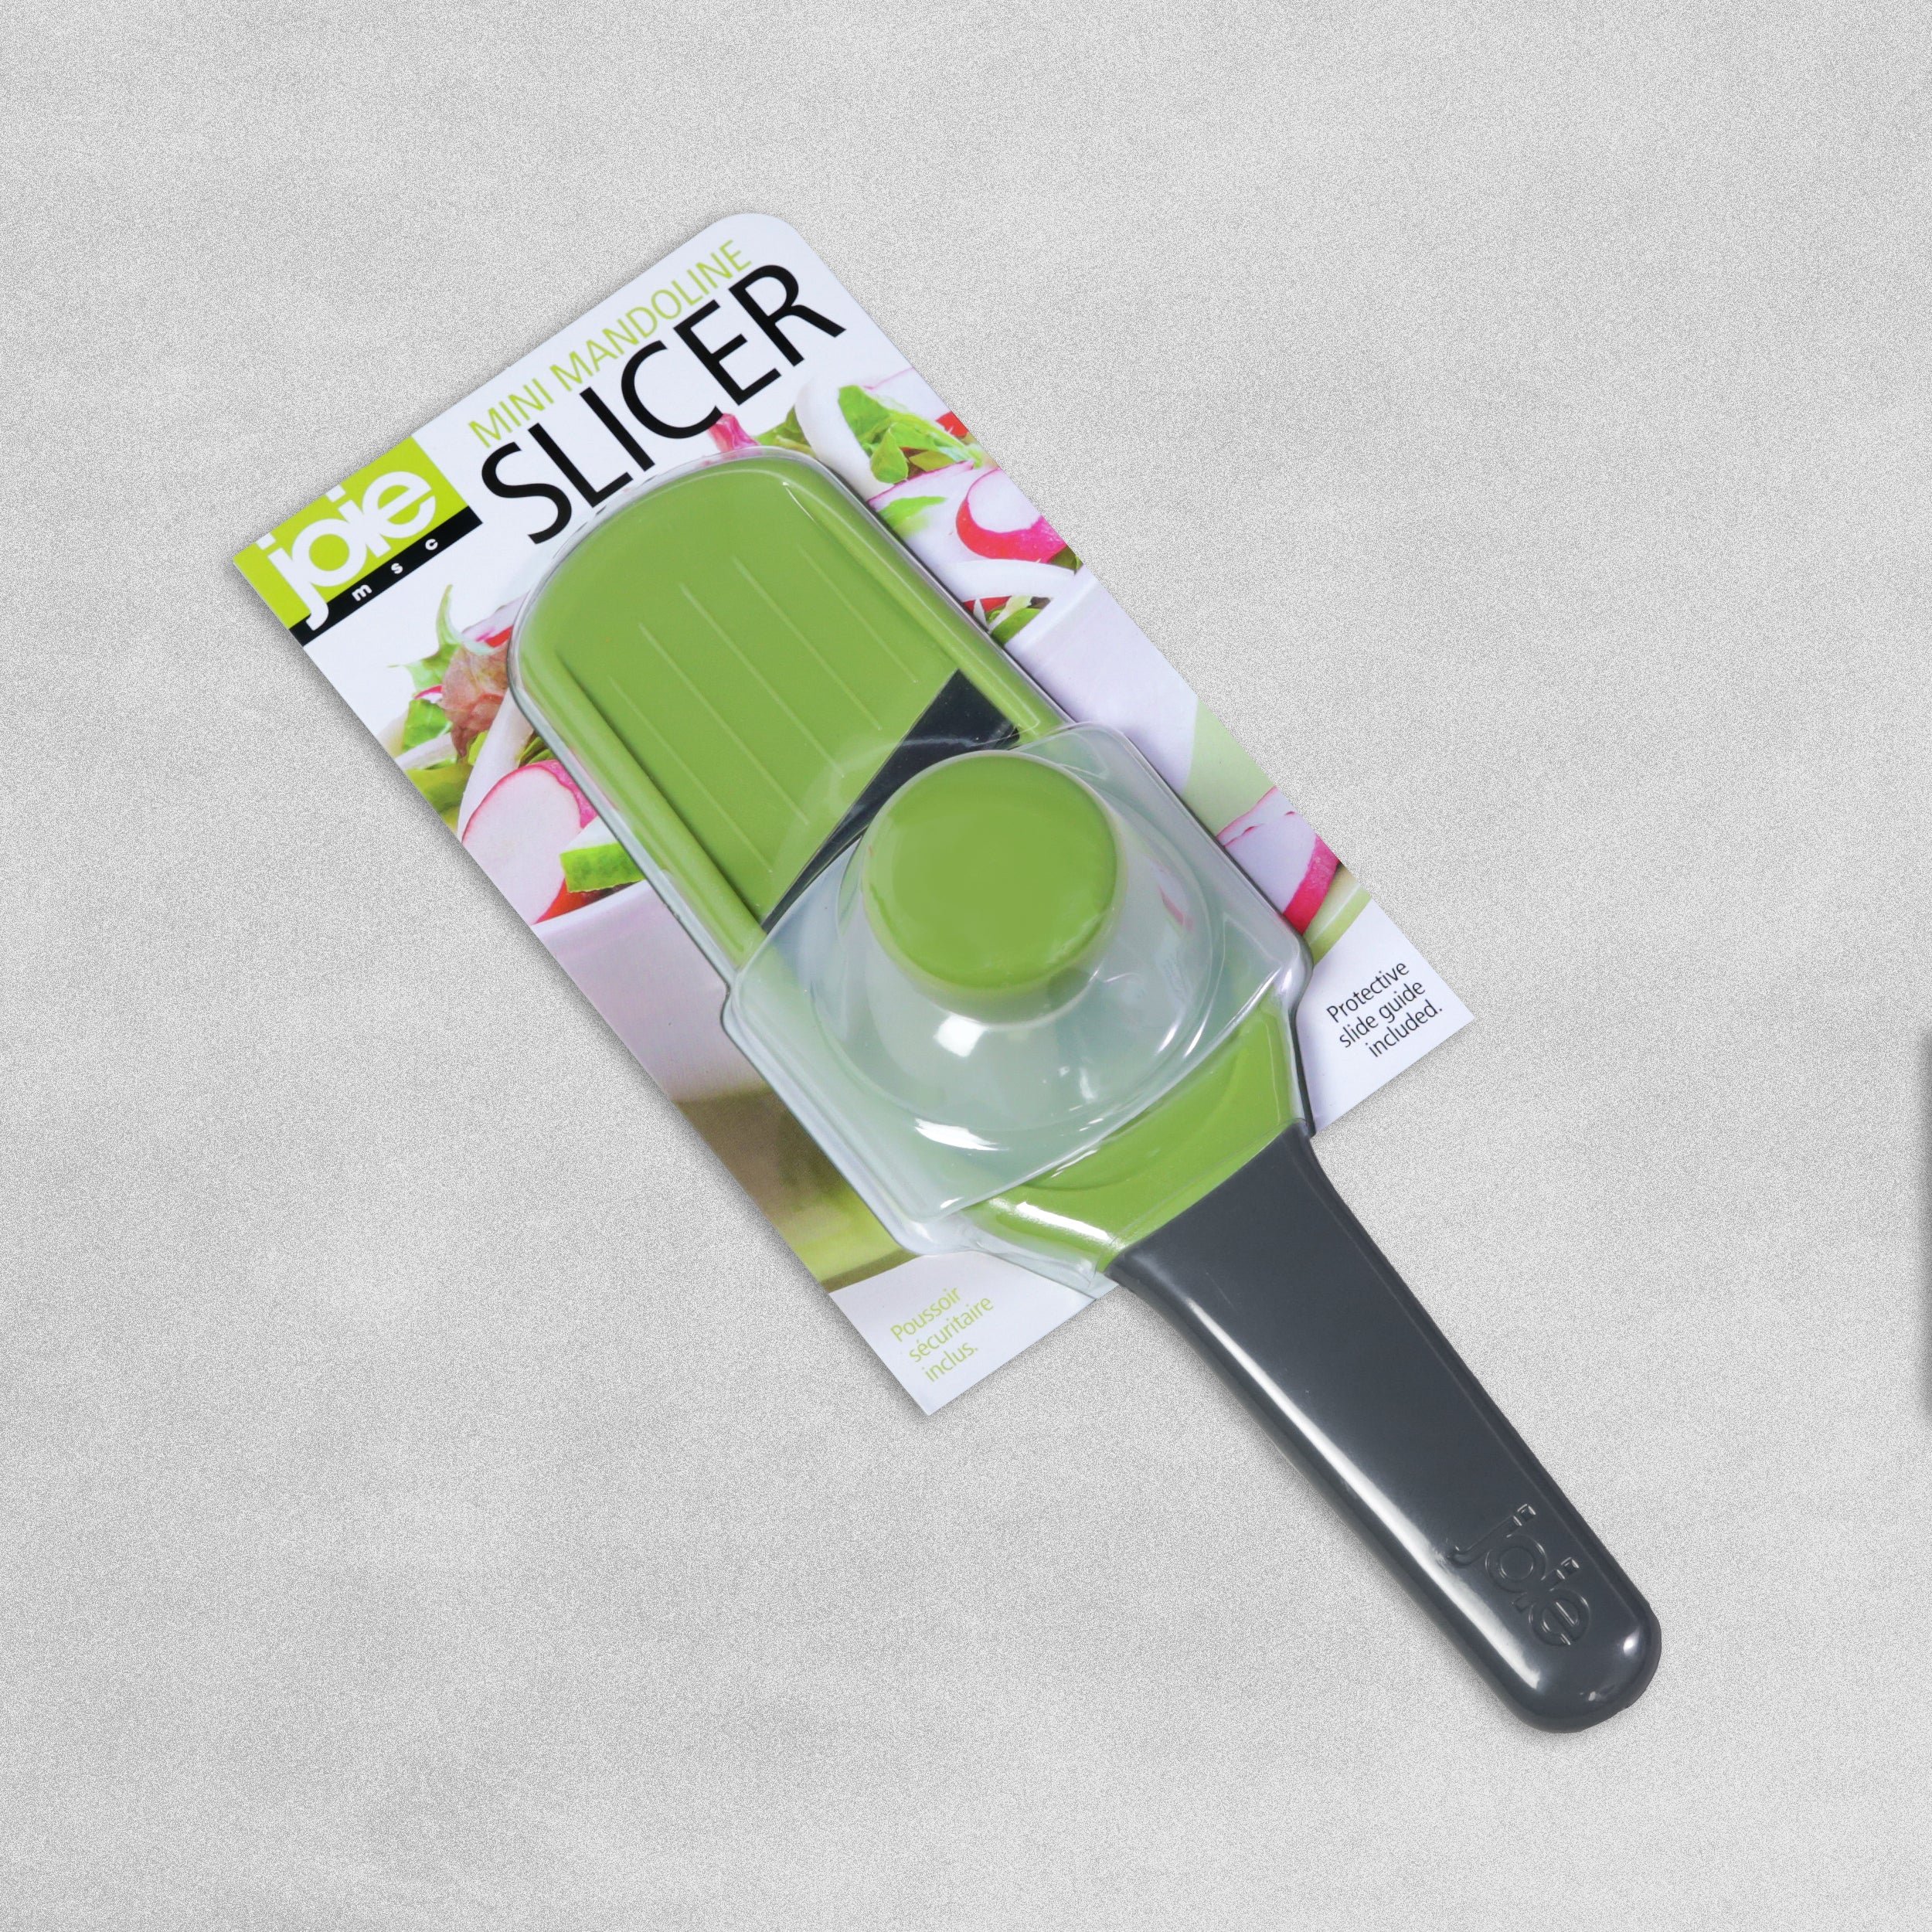 Joie Kitchen Gadgets Food Slicer Mini Mandoline